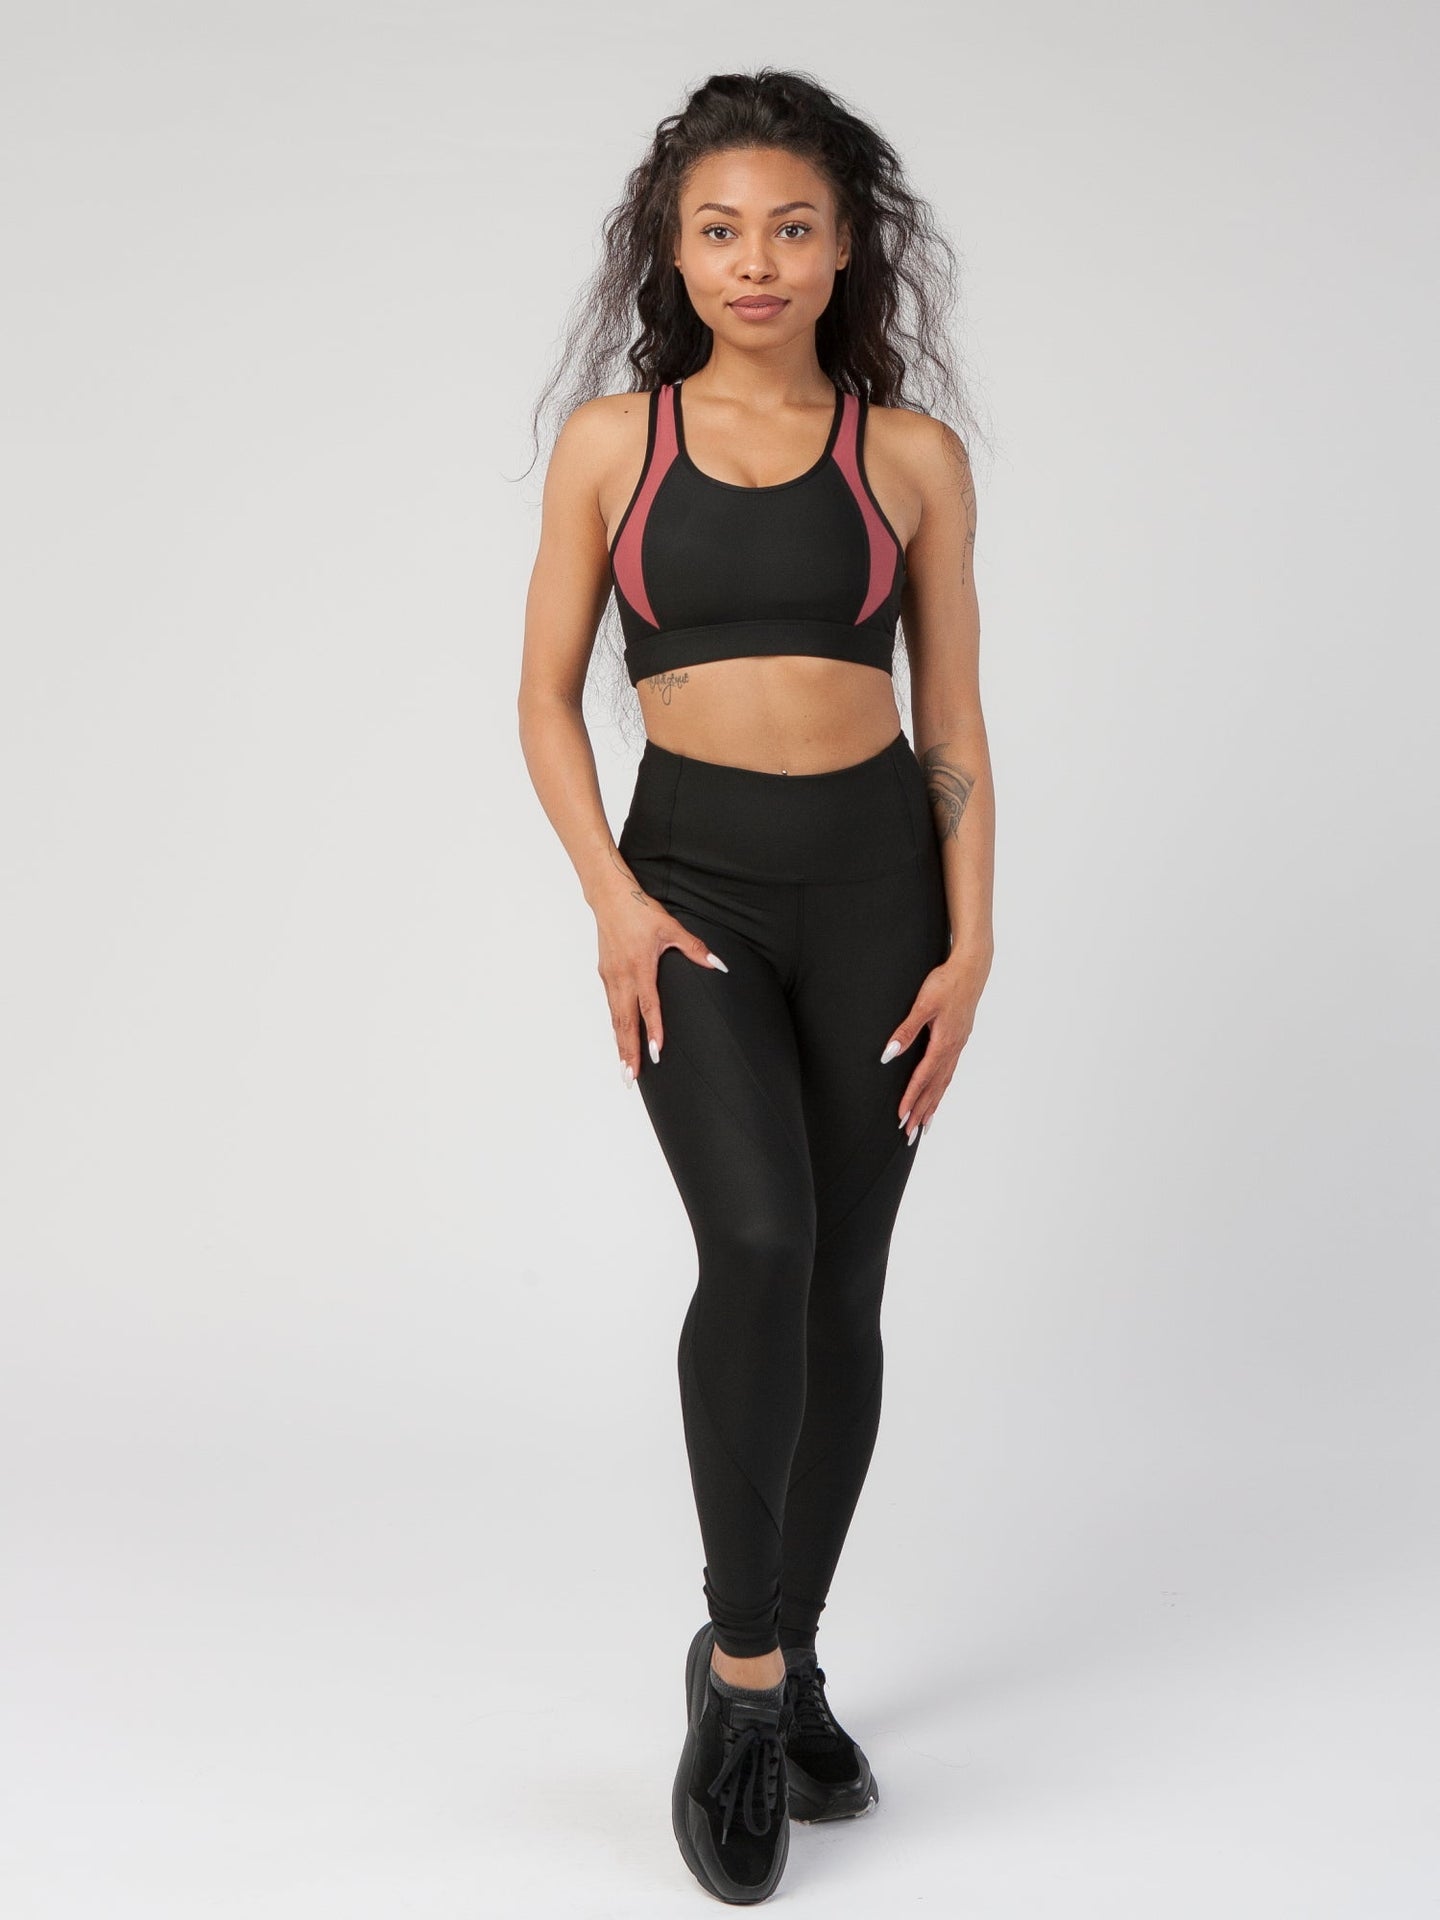 Pro-Fit High Fashion Workout Sports Bra - Profit Outfits